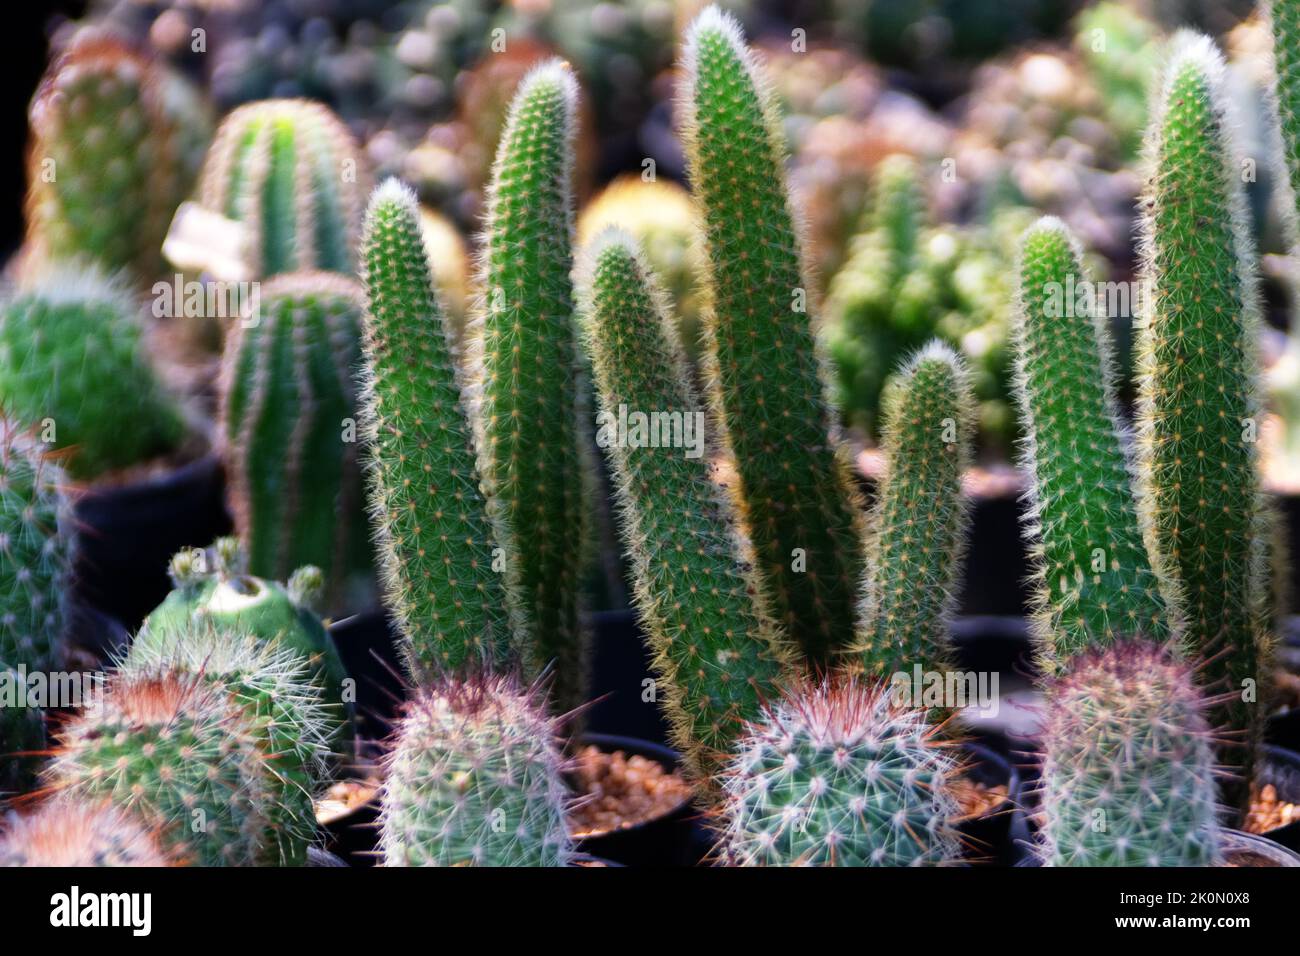 Cactus and milkweed breeding. Cleistocactus - south american cacti Stock Photo